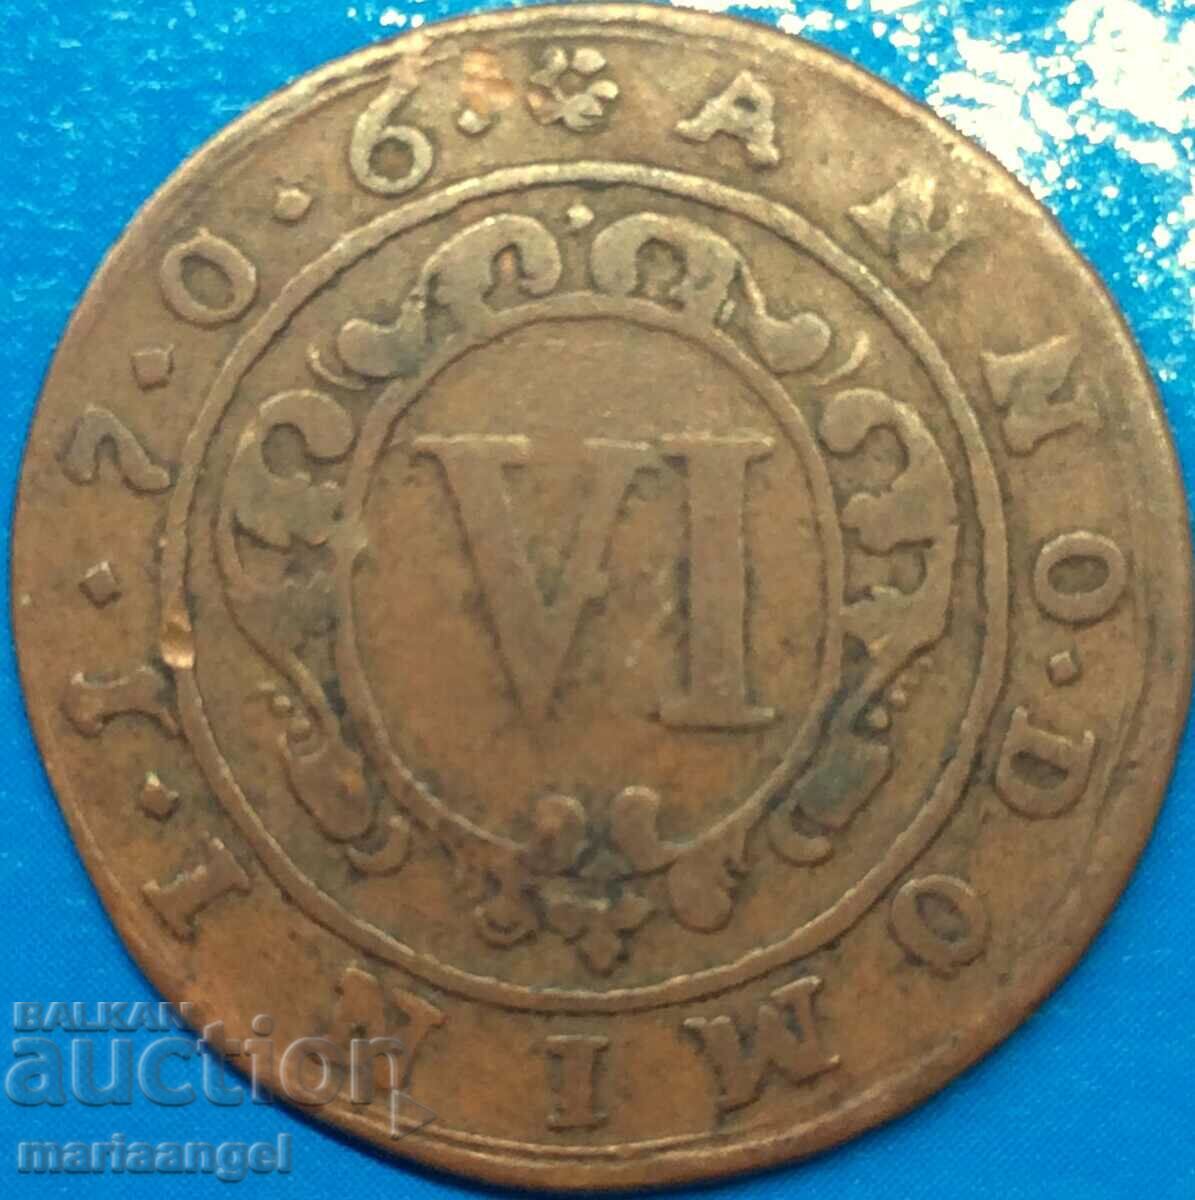 6 pfennig 1706 Γερμανία Χαλκός Padeborn - αρκετά σπάνιος